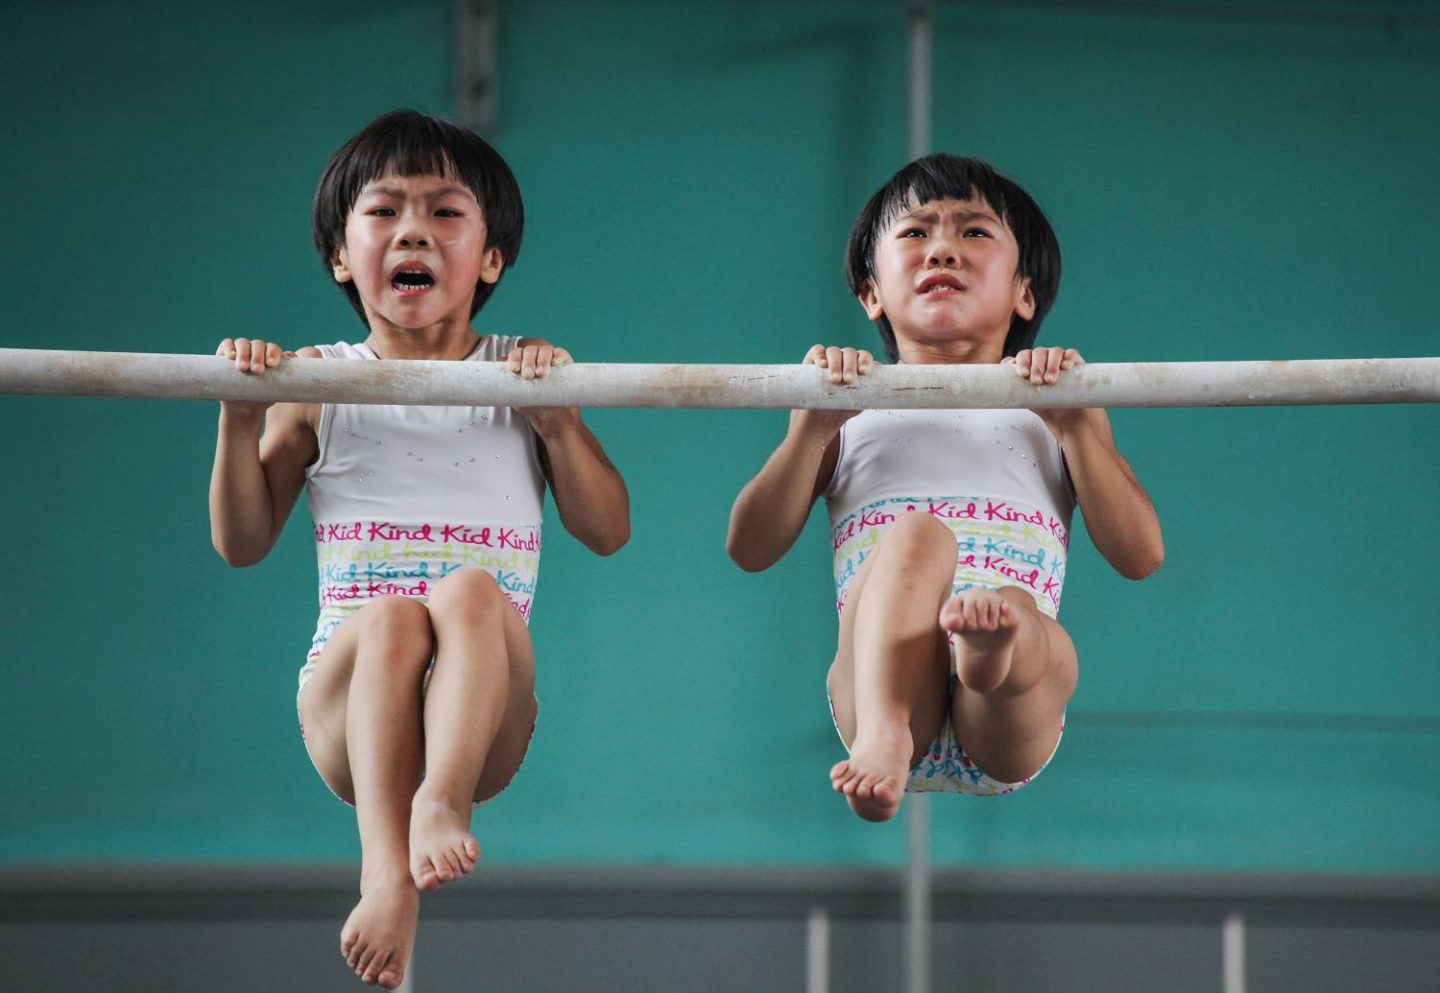 The twins' gymnastics dream